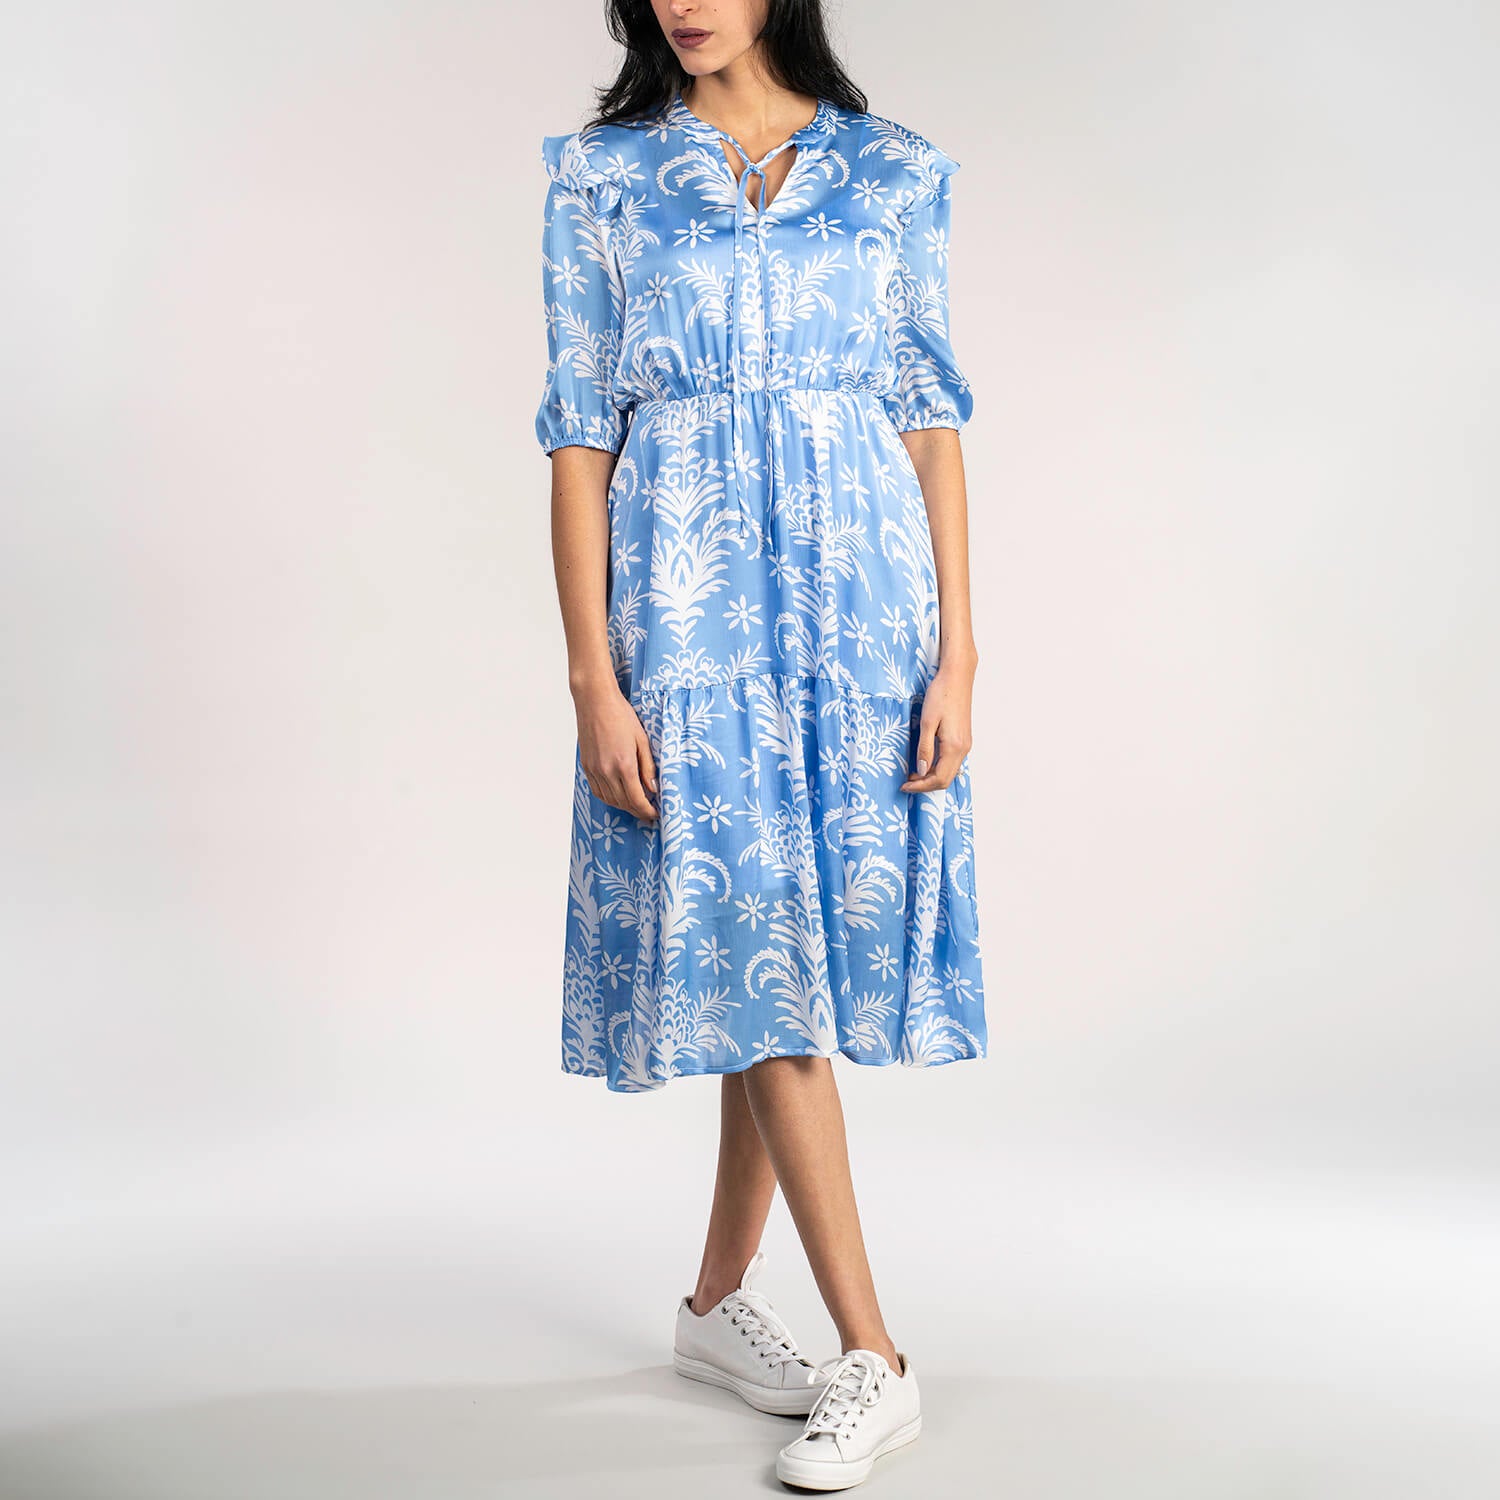 Naoise Nancy Dress - Blue 1 Shaws Department Stores